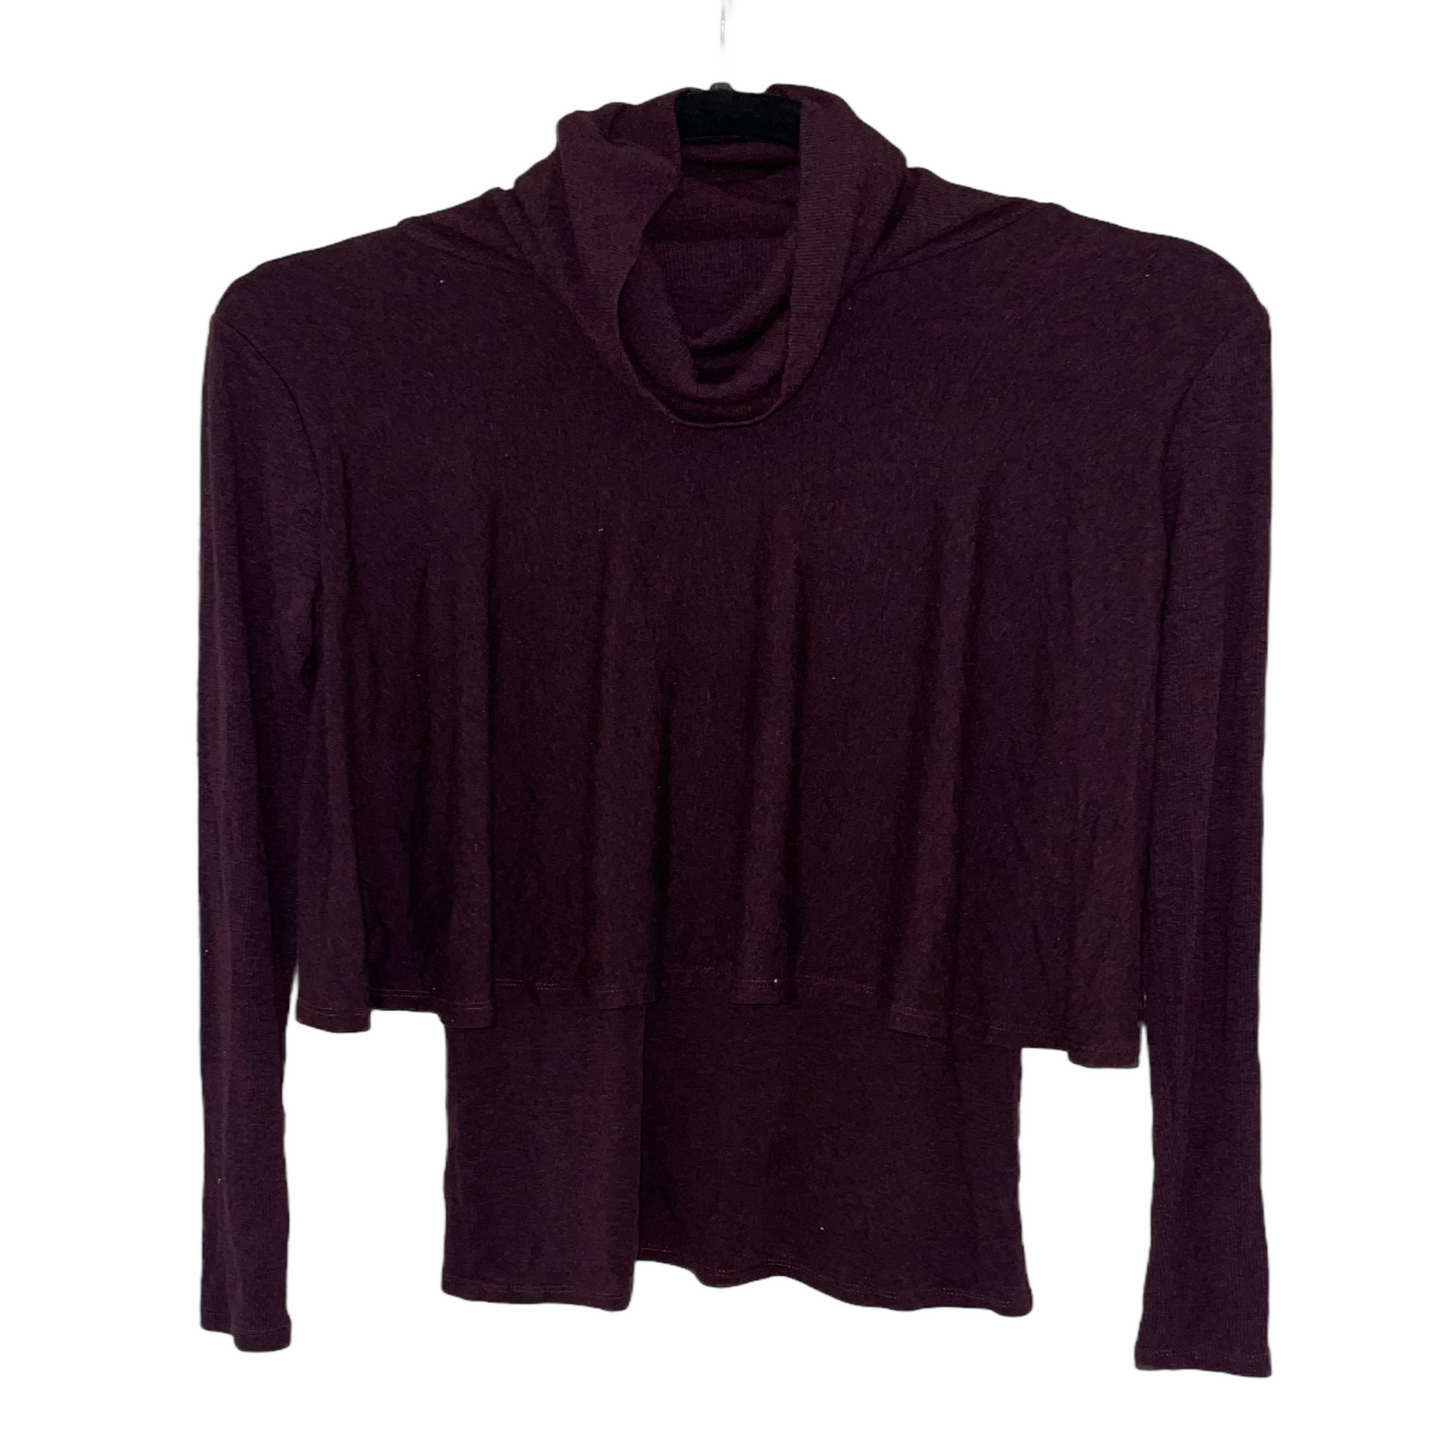 Shirt-Long Sleeved Cowl Neck Split Design-Maroon Color-By Atina Cristina